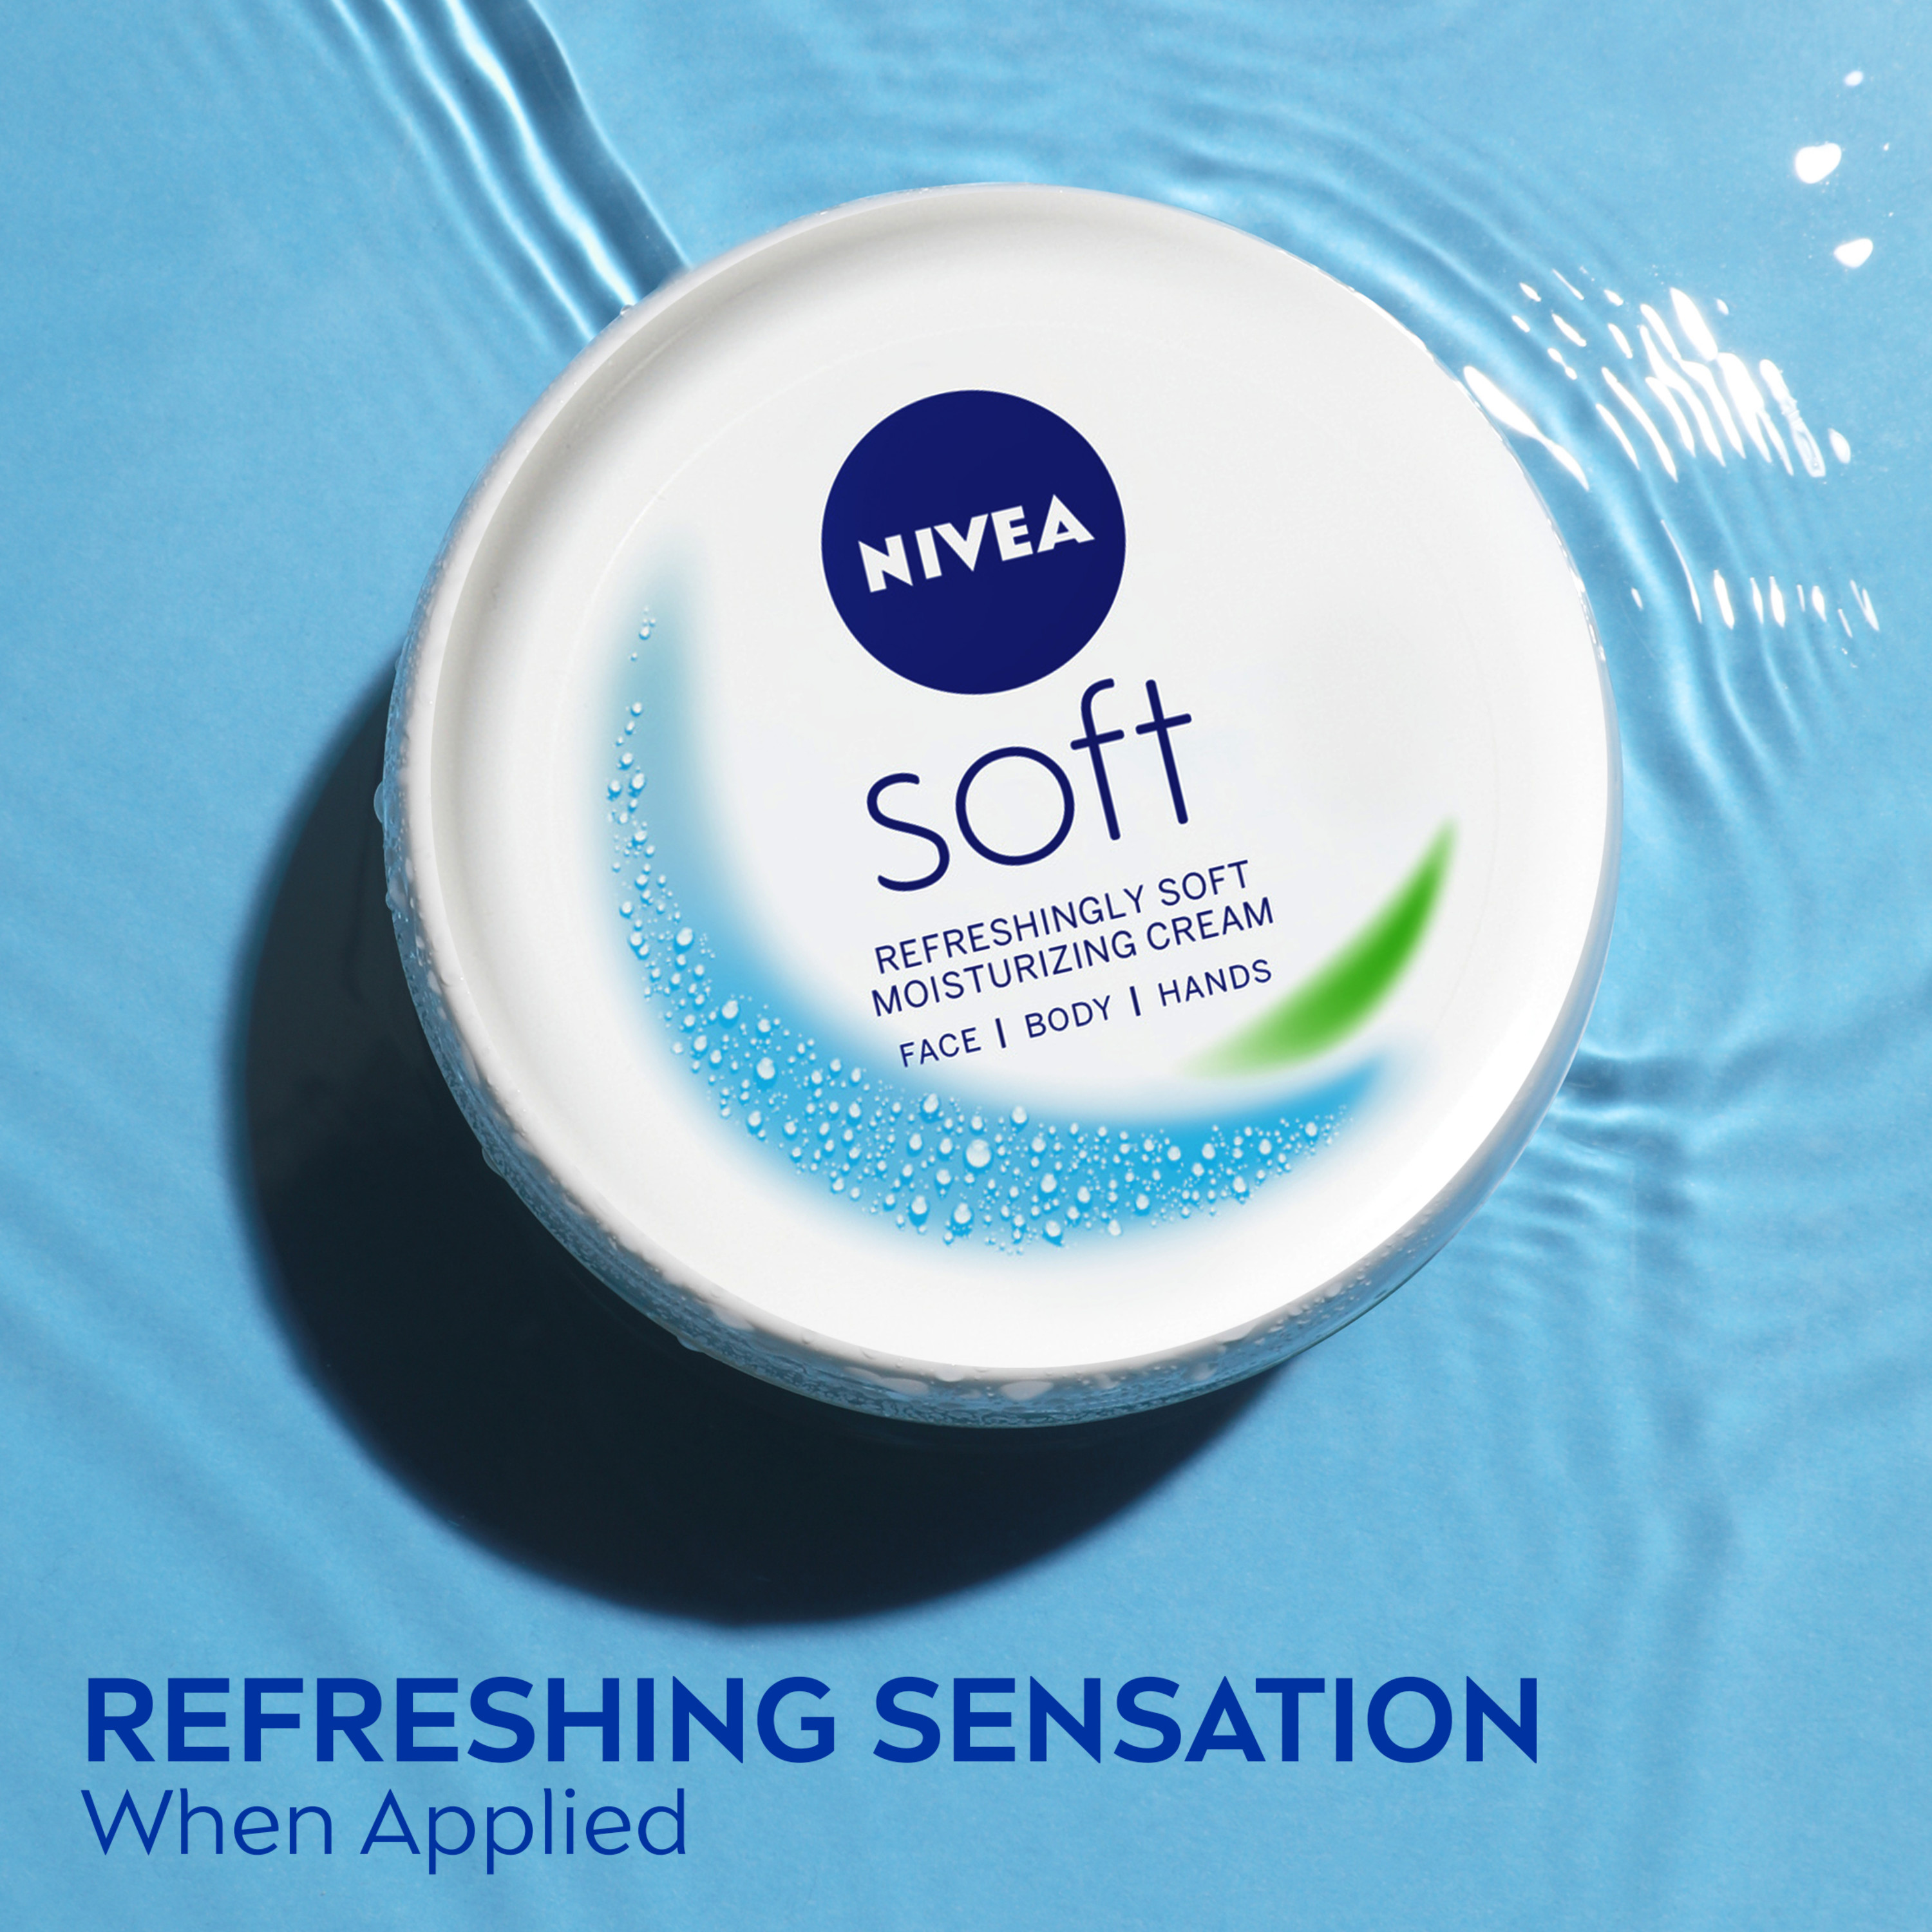 NIVEA Soft Cream, Refreshingly Soft Moisturizing Cream, Body Cream, Hand Cream, Face Cream, 16 Oz Jar - image 4 of 9